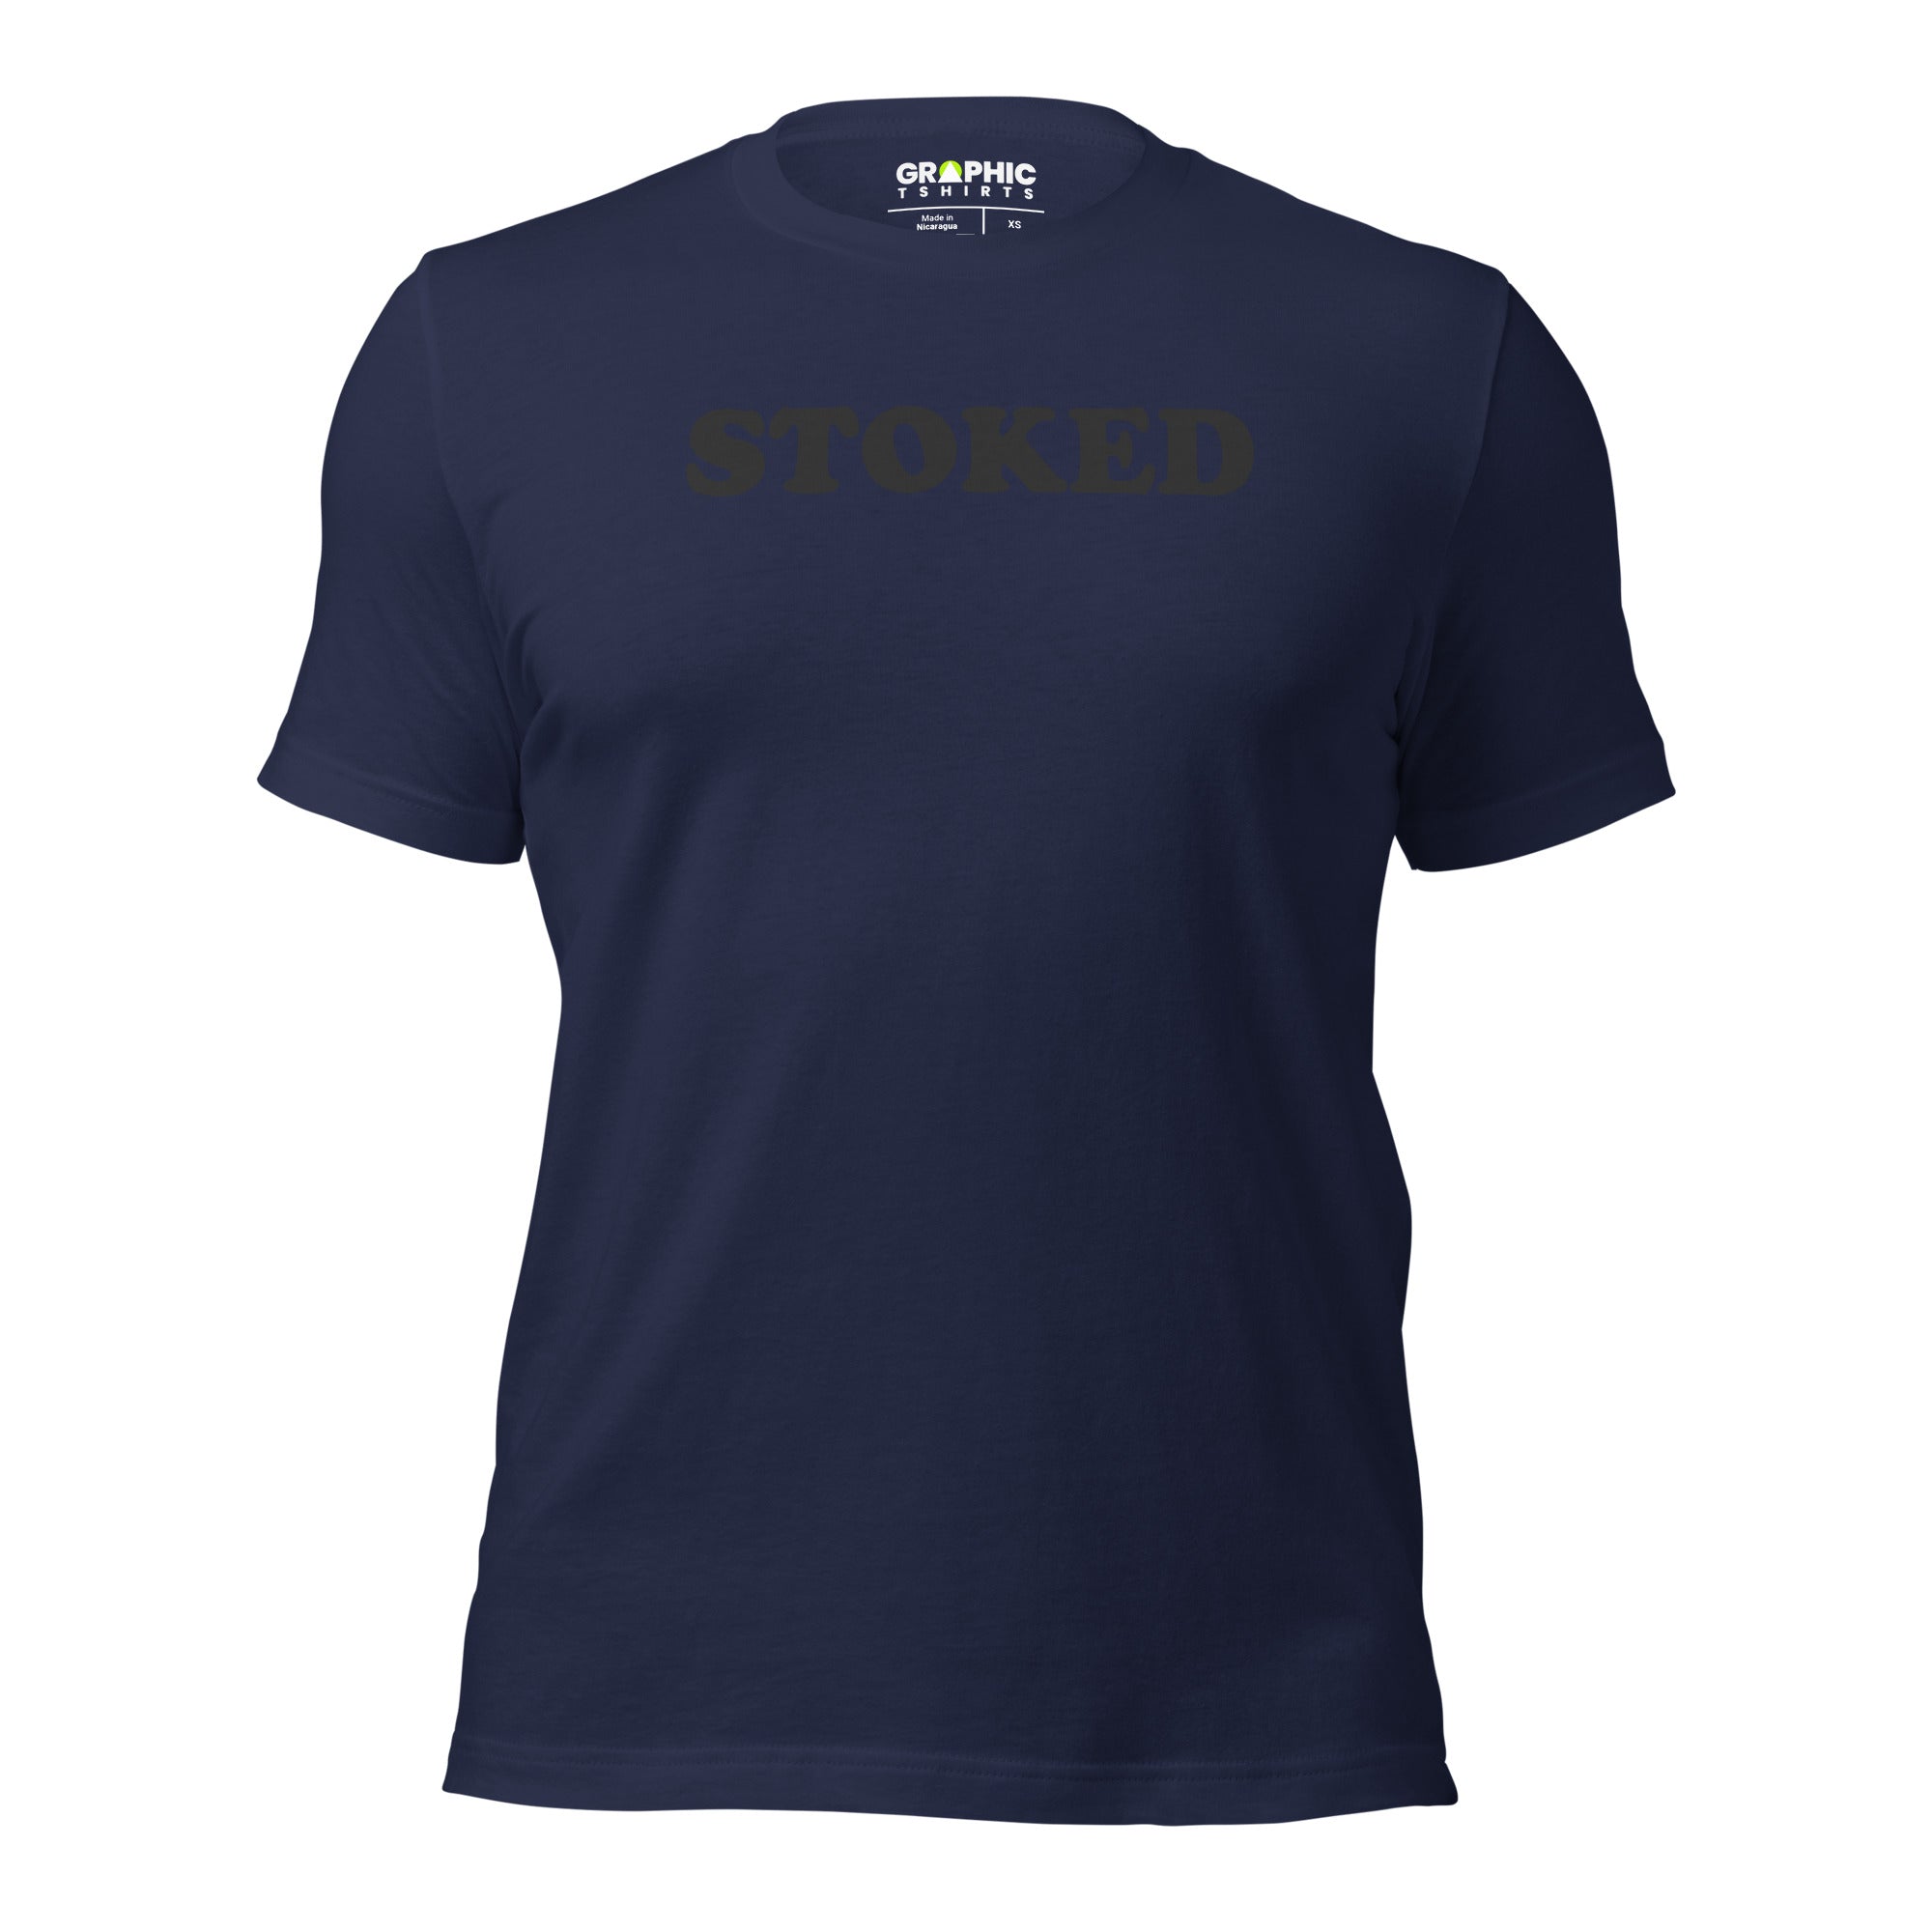 Unisex Staple T-Shirt - Stoked - GRAPHIC T-SHIRTS